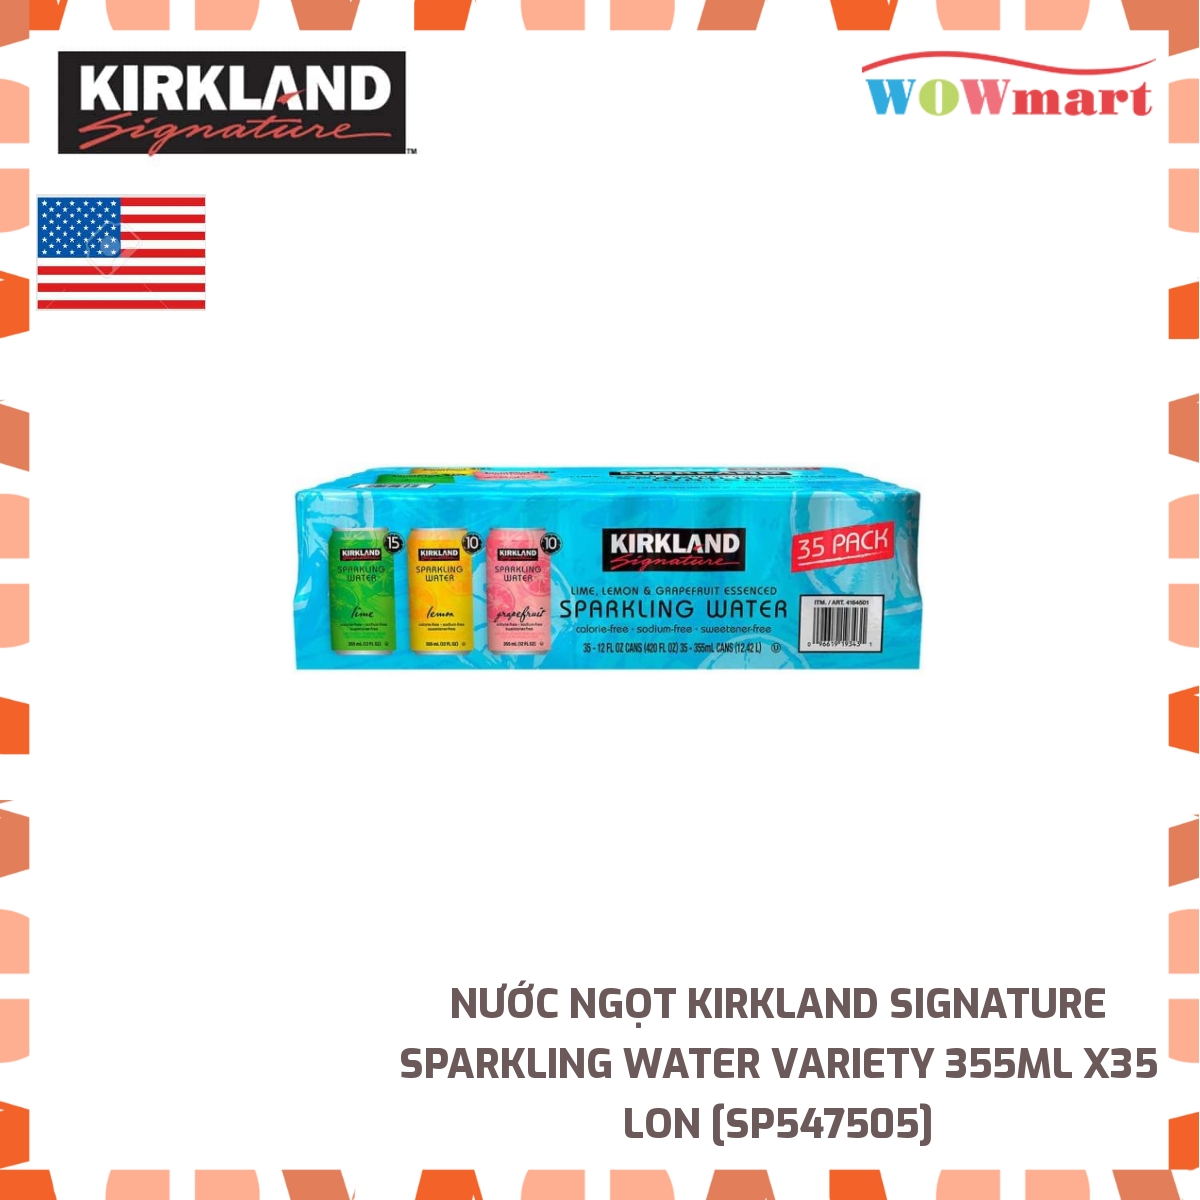 Nước ngọt Kirkland Signature Sparkling Water Variety 355ml x35 lon